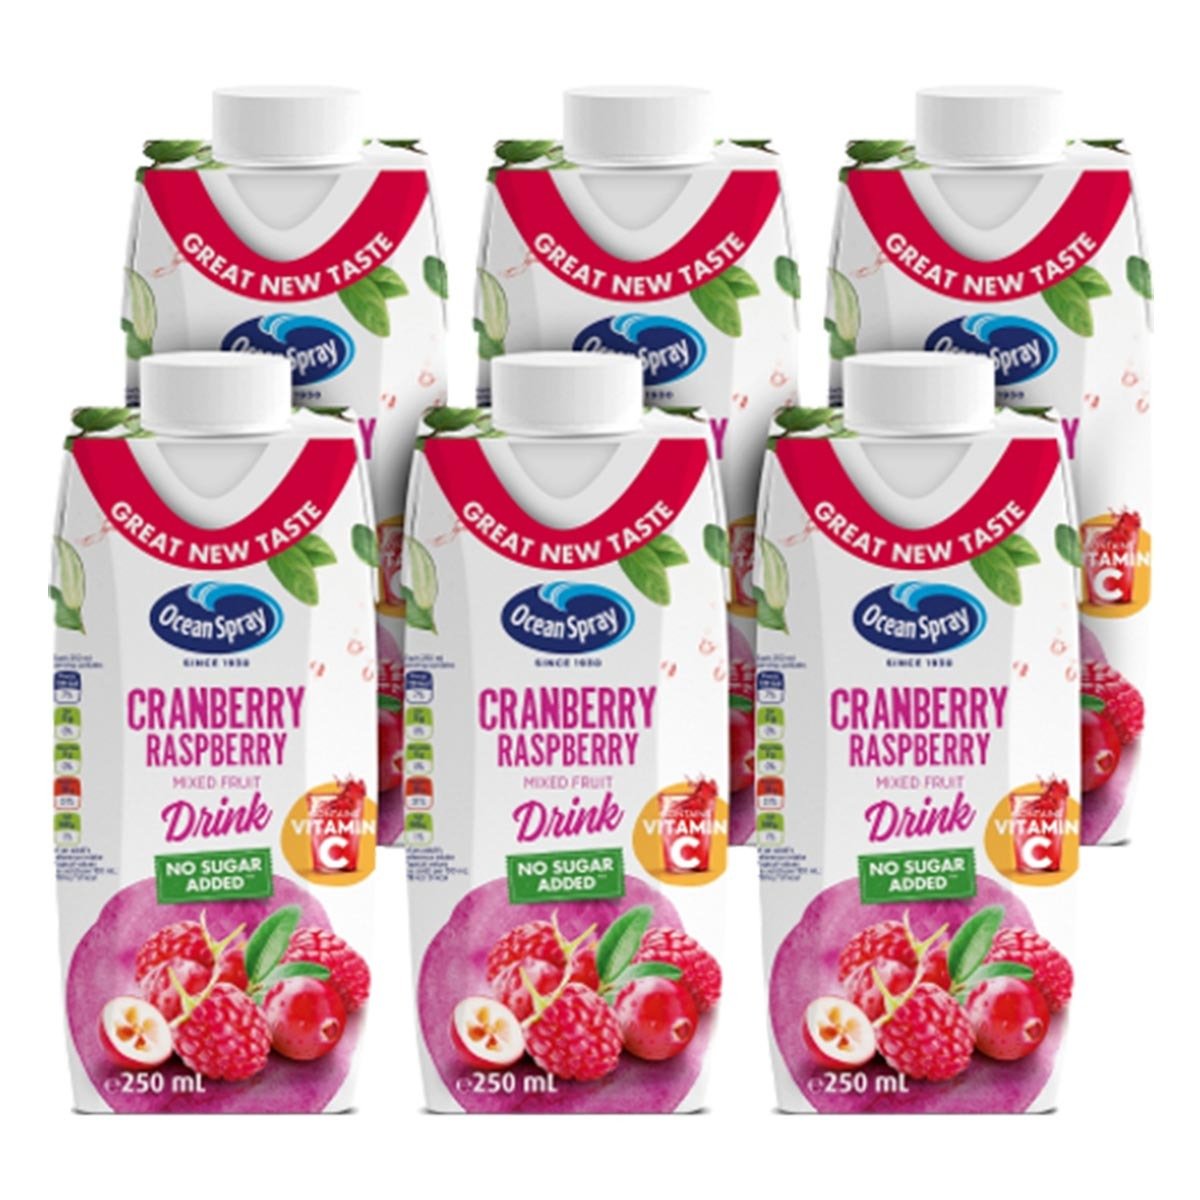 Ocean Spray Cranberry Raspberry Mixed Fruit Drink No Added Sugar 250 ml